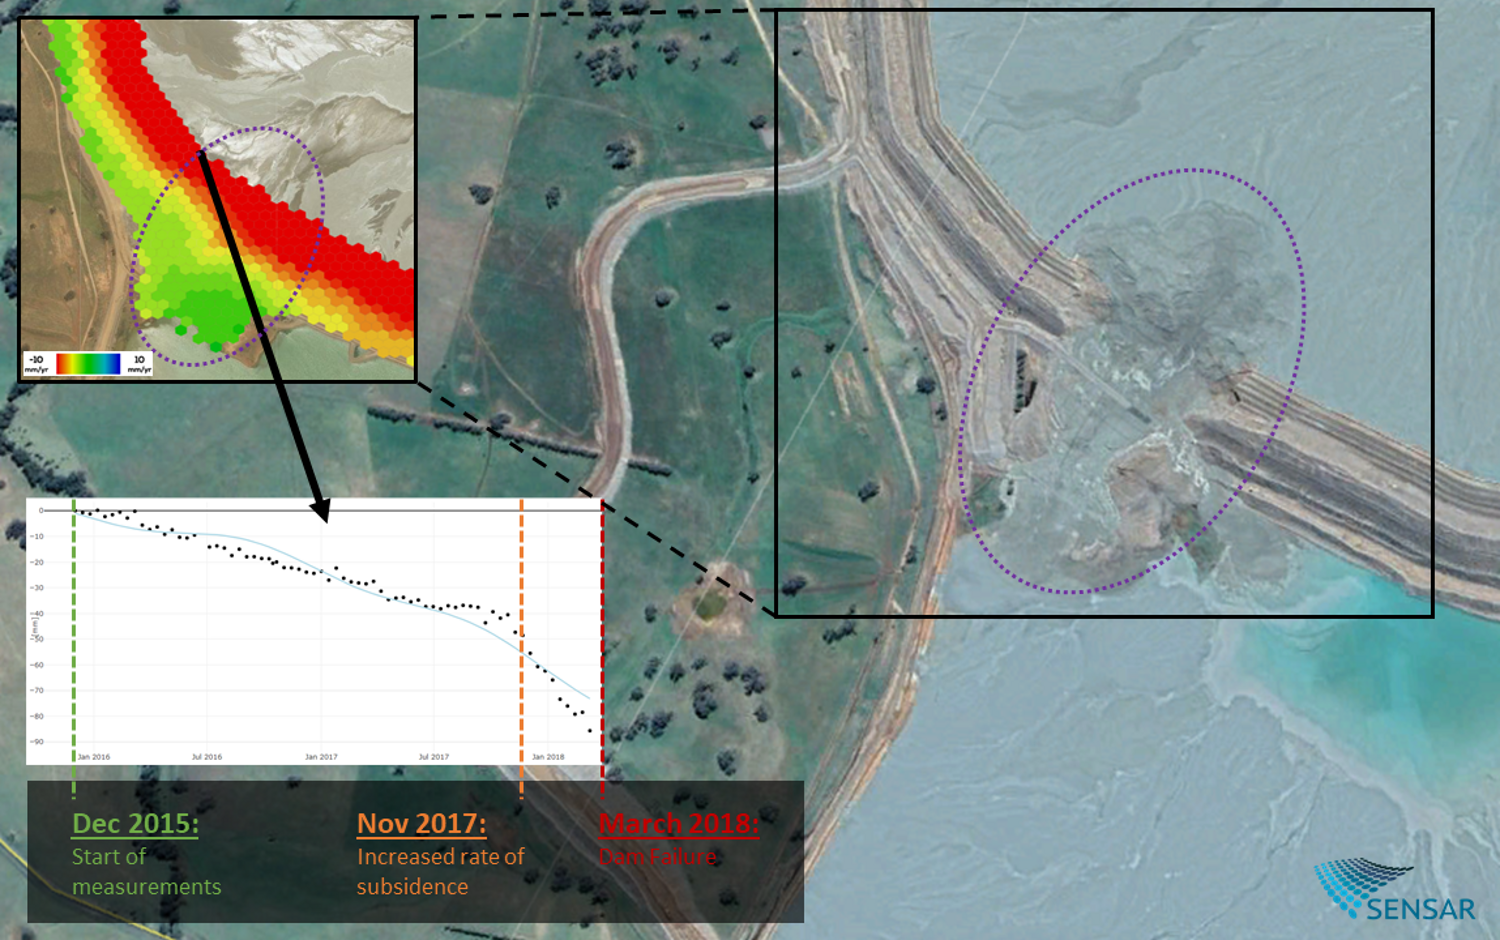 Detection of tailings dam collapse precursor